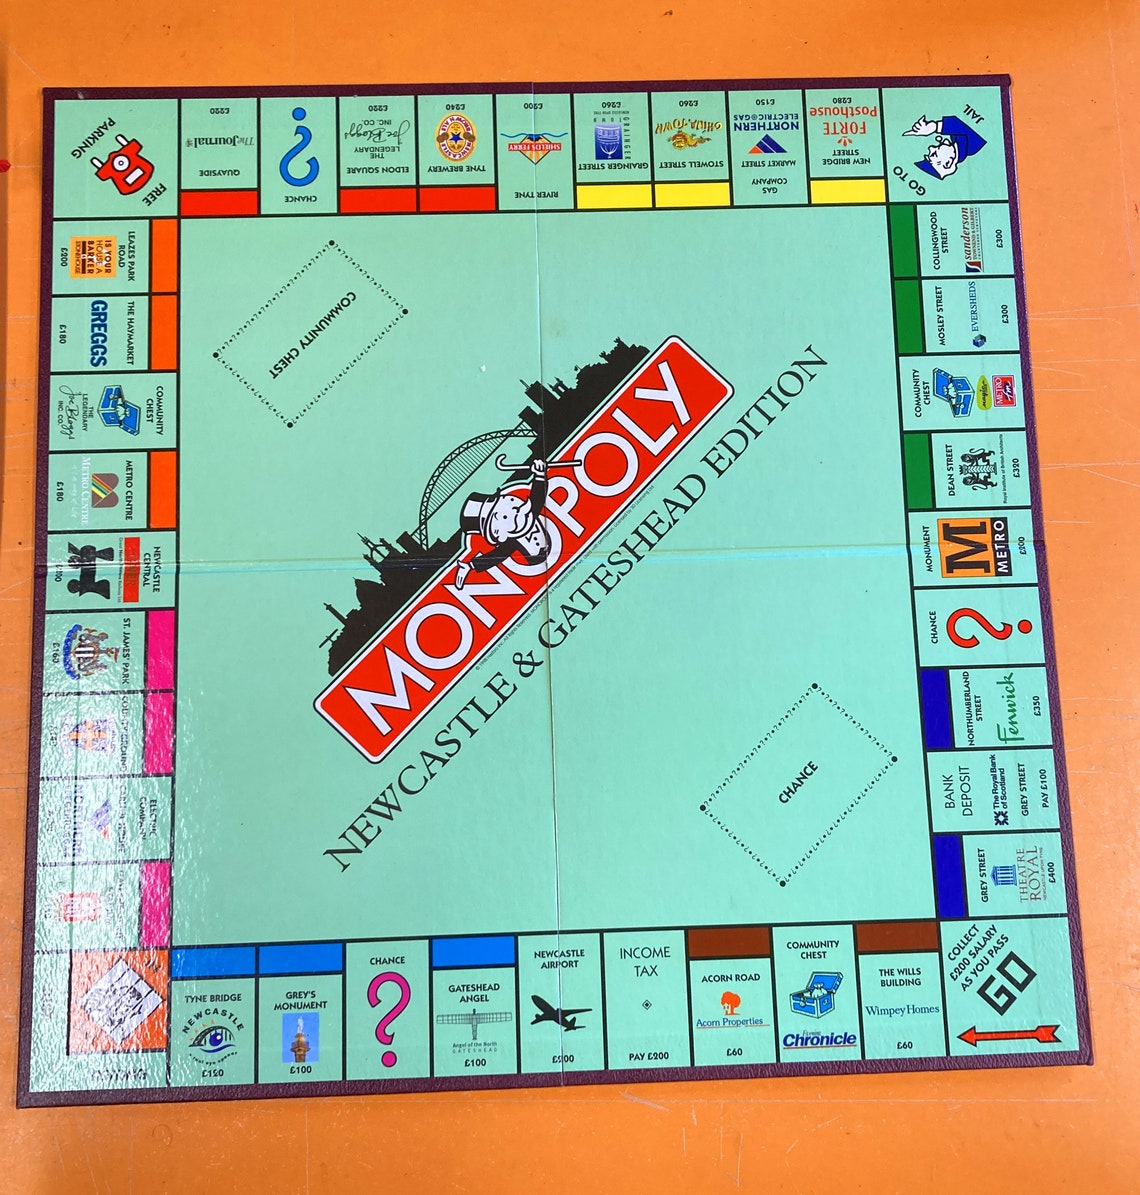 Monopoly Newcastle and Gateshead edition by Waddingtons | Etsy